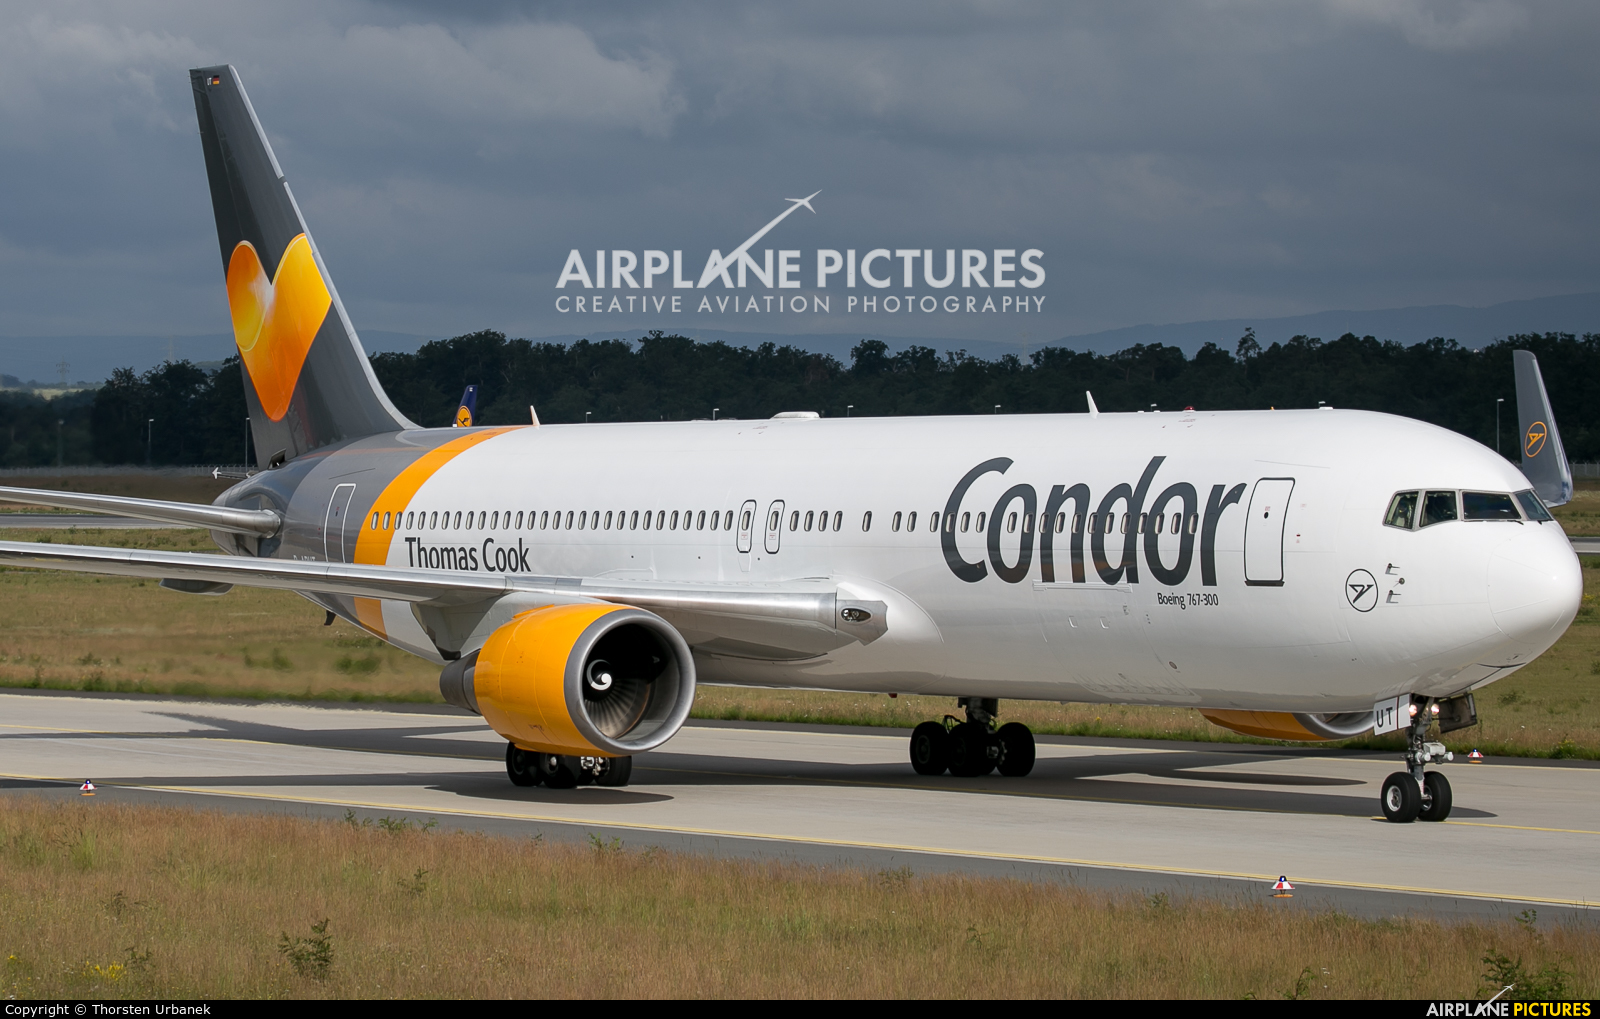 Condor D-ABUT aircraft at Frankfurt